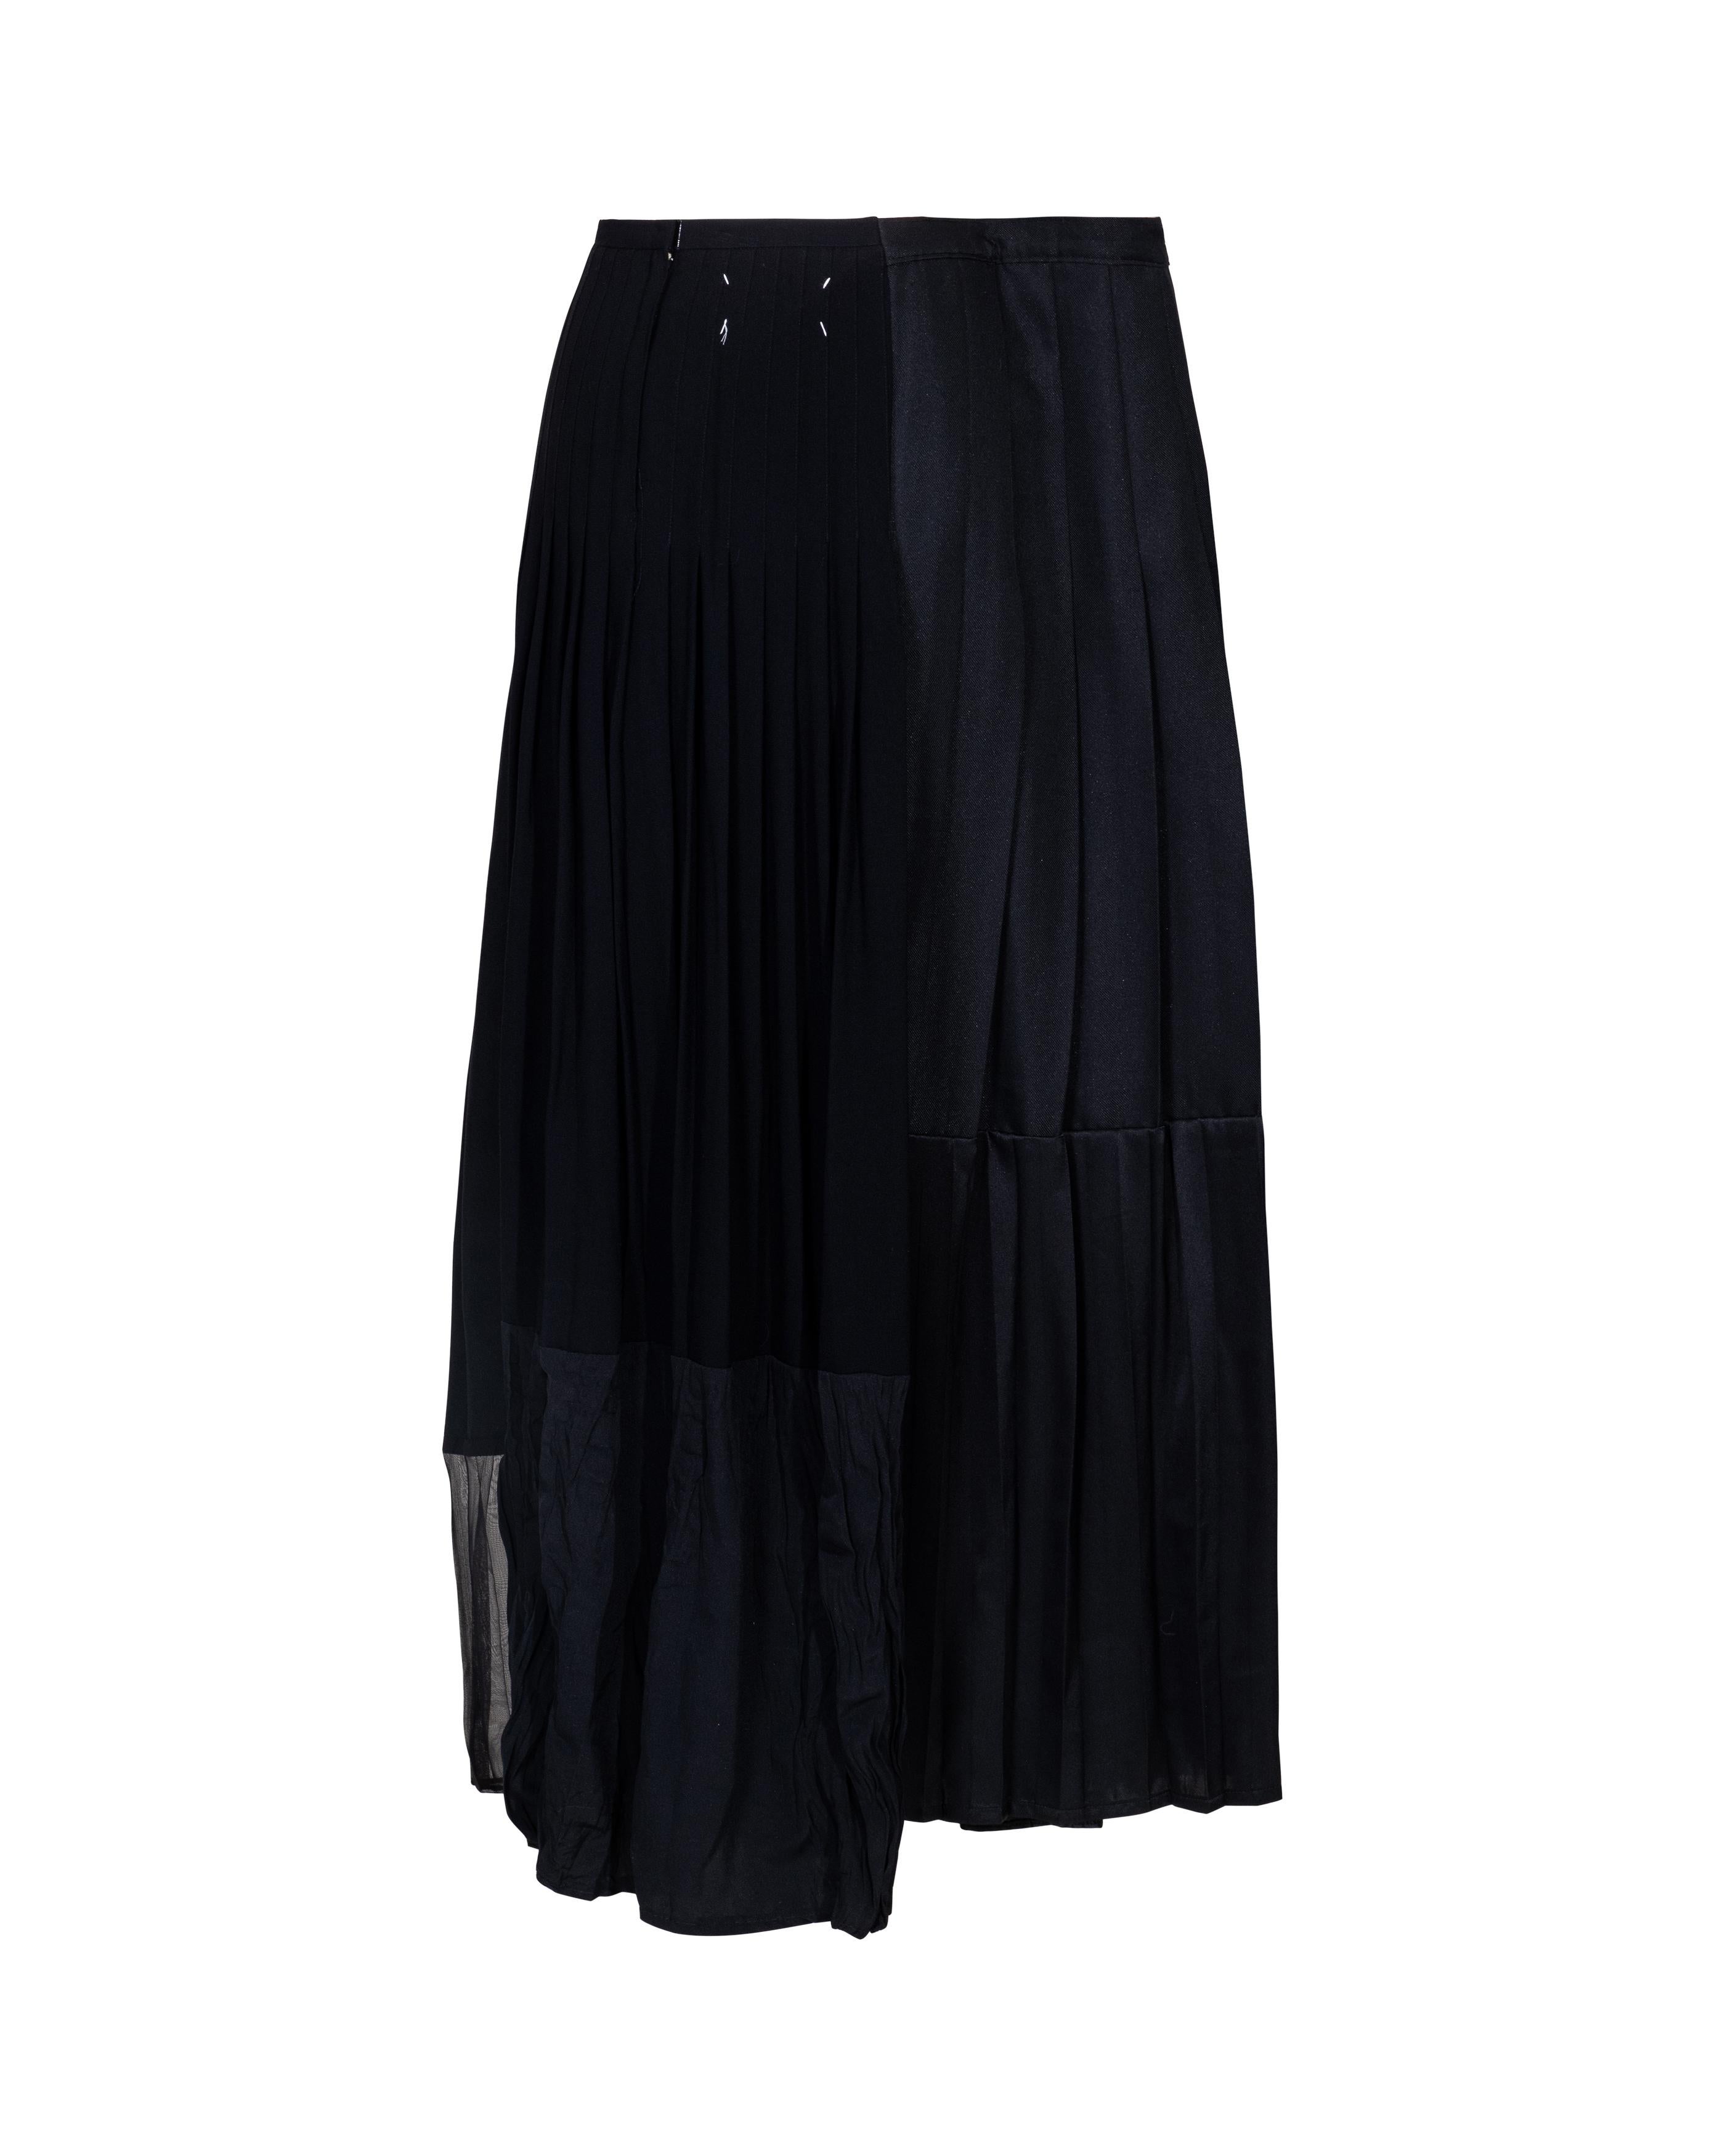 S/S 2001 Maison Martin Margiela One-of-One Black Pleated Artisanal Maxi Skirt For Sale 1